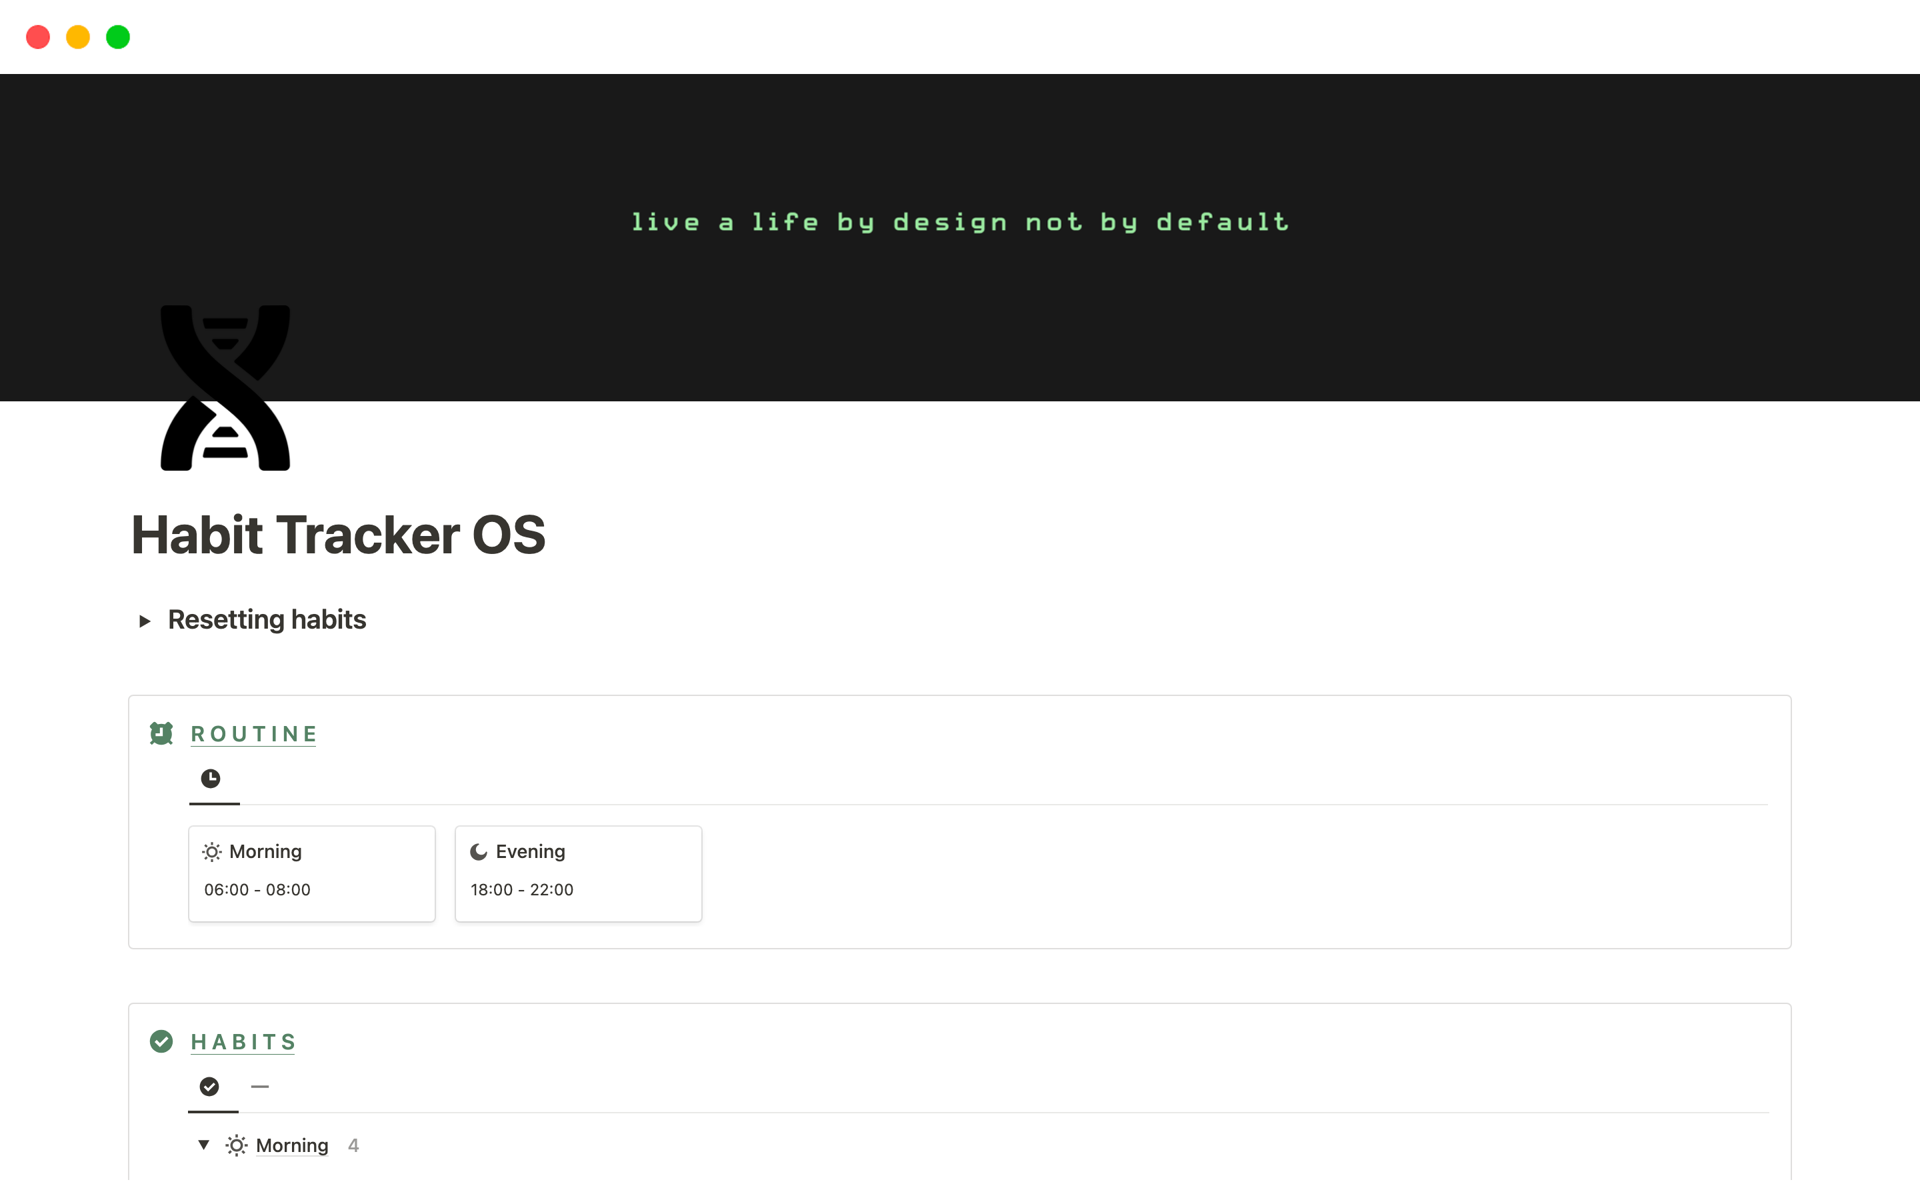 Vista previa de una plantilla para Habit Tracker OS